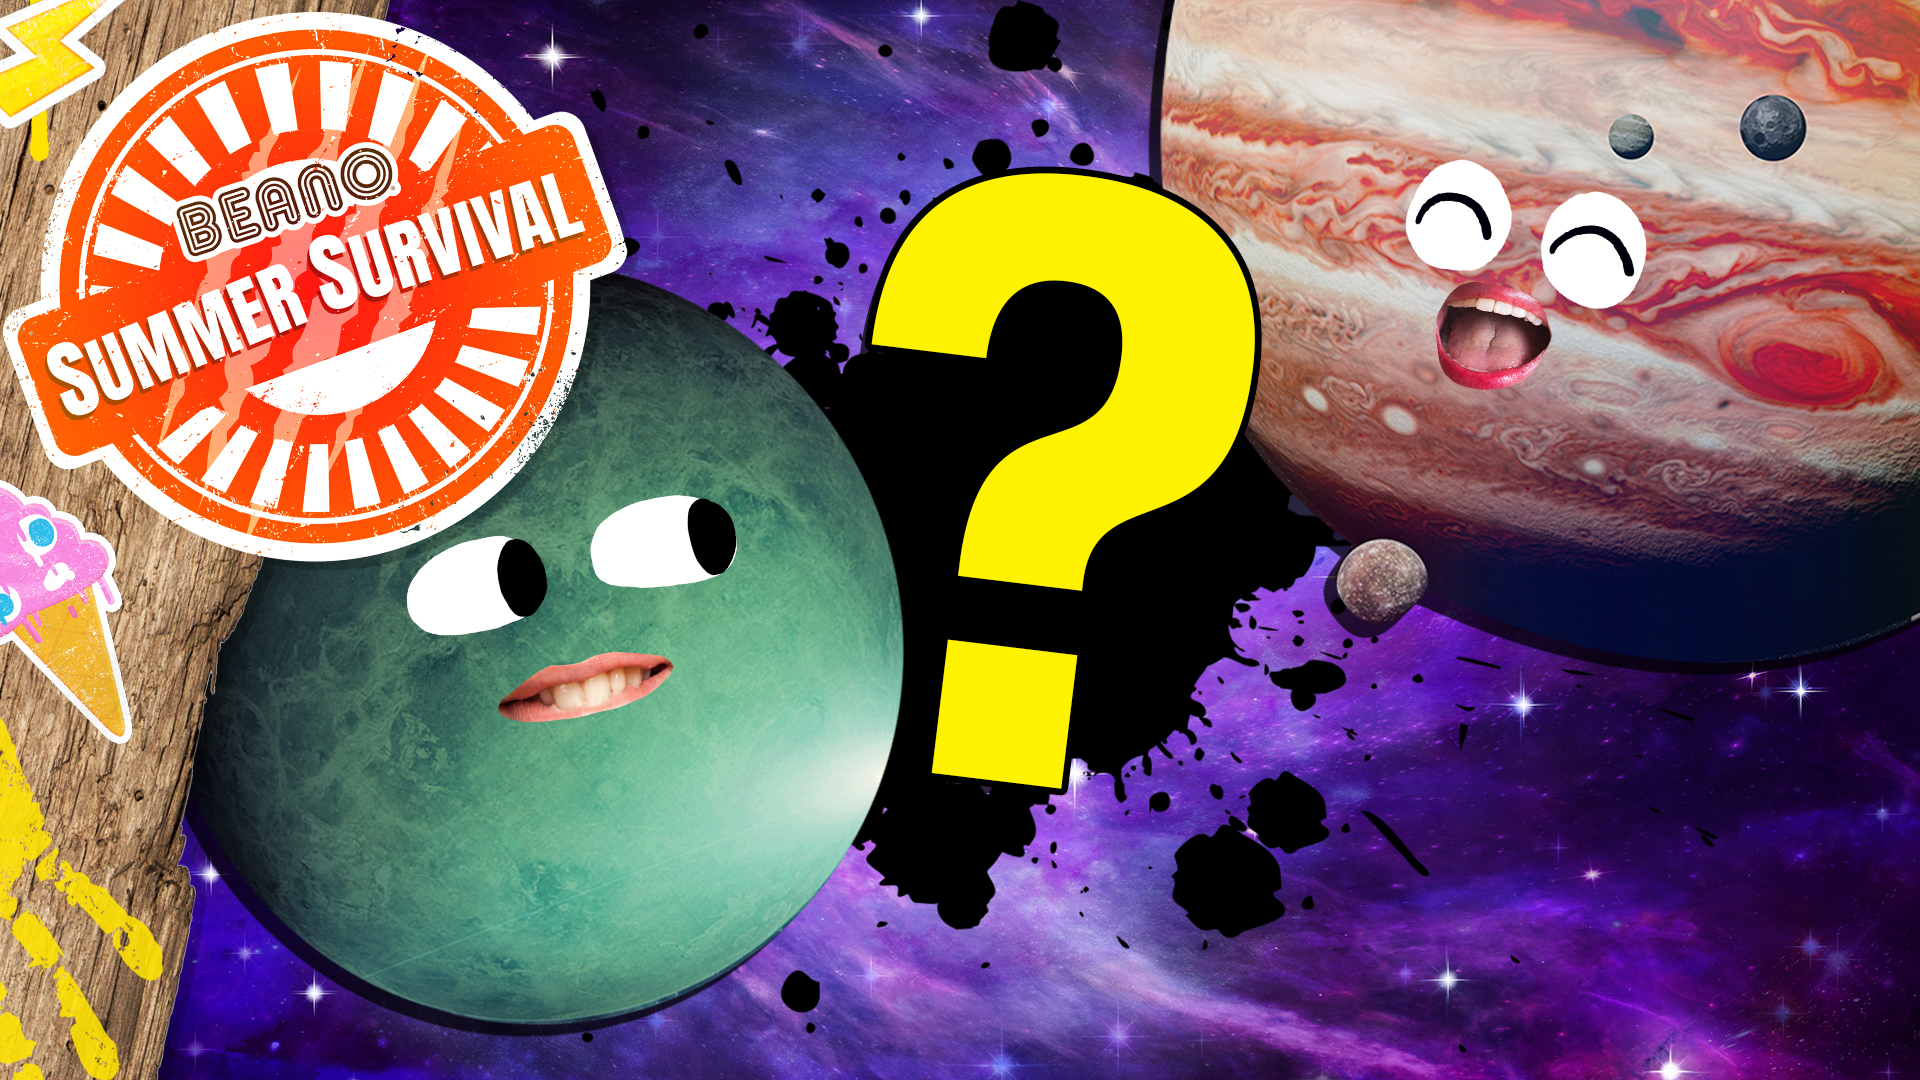 Summer Survival: Space Quiz: True or False?